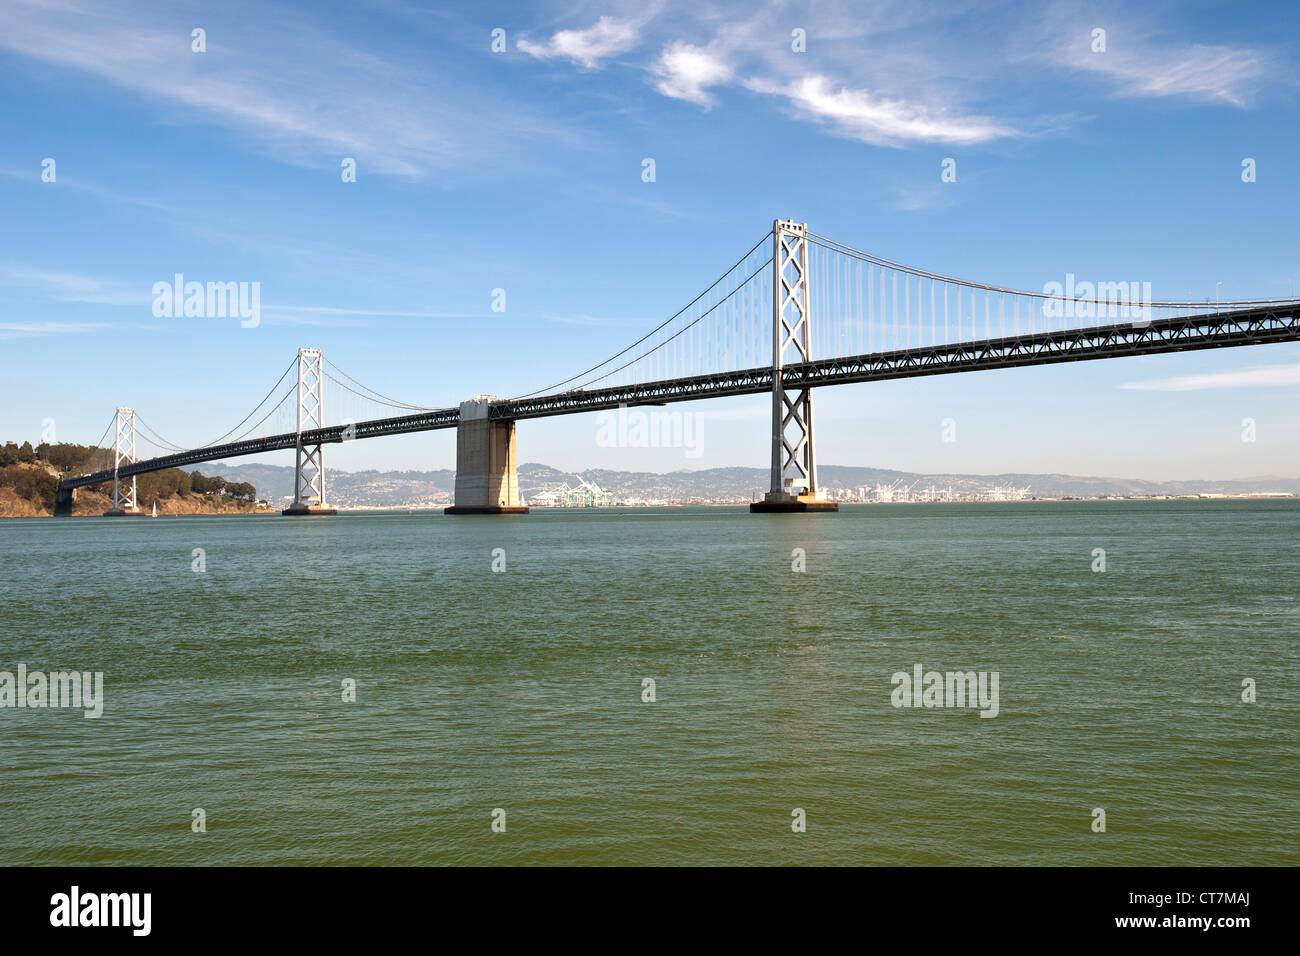 L'Oakland Bay Bridge enjambant la baie de San Francisco en Californie, USA. Banque D'Images